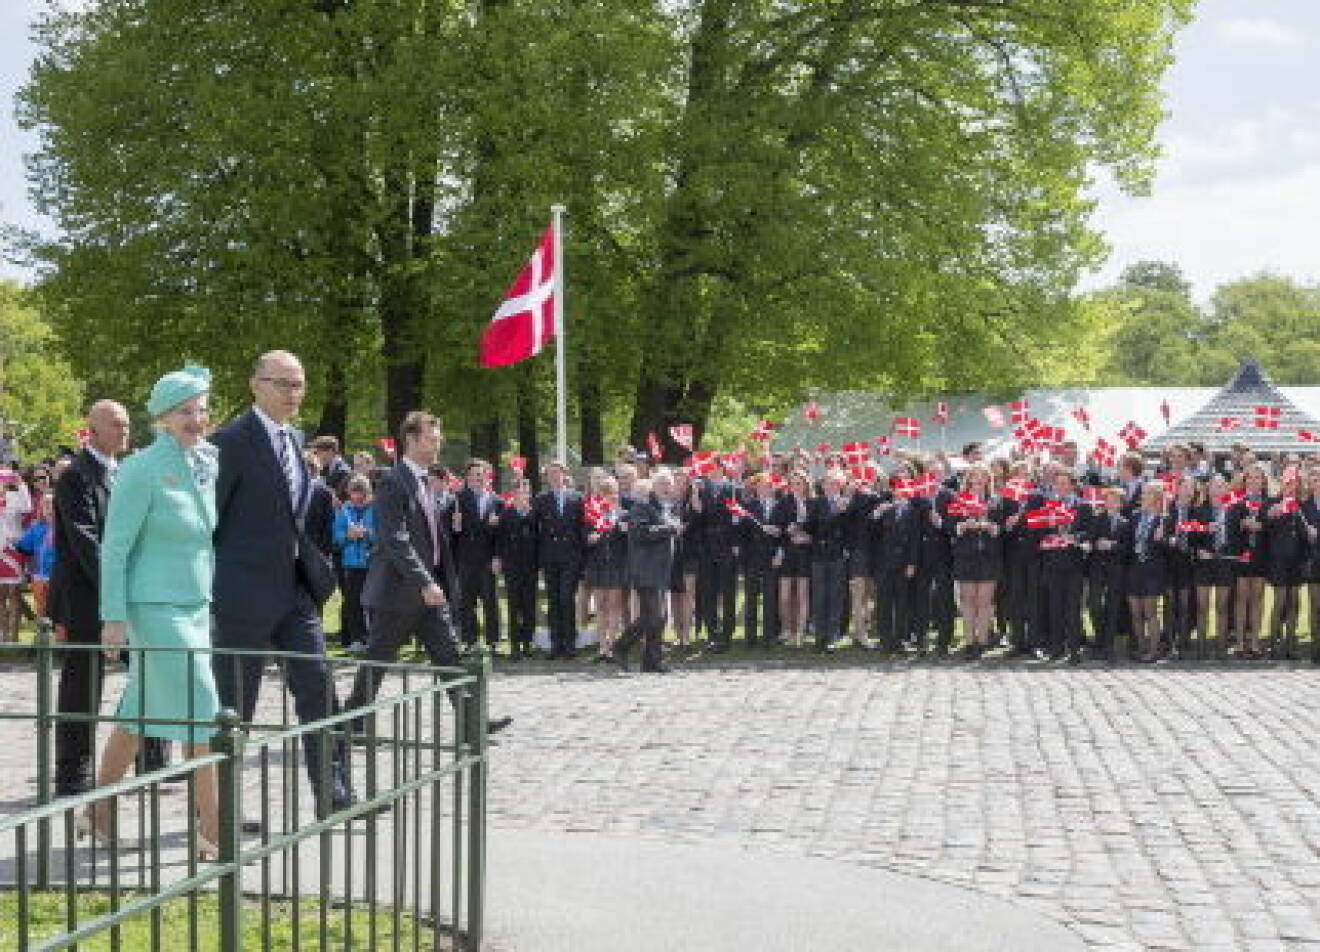 Queen Margrethe attending Herlufsholms 450-year anniversary